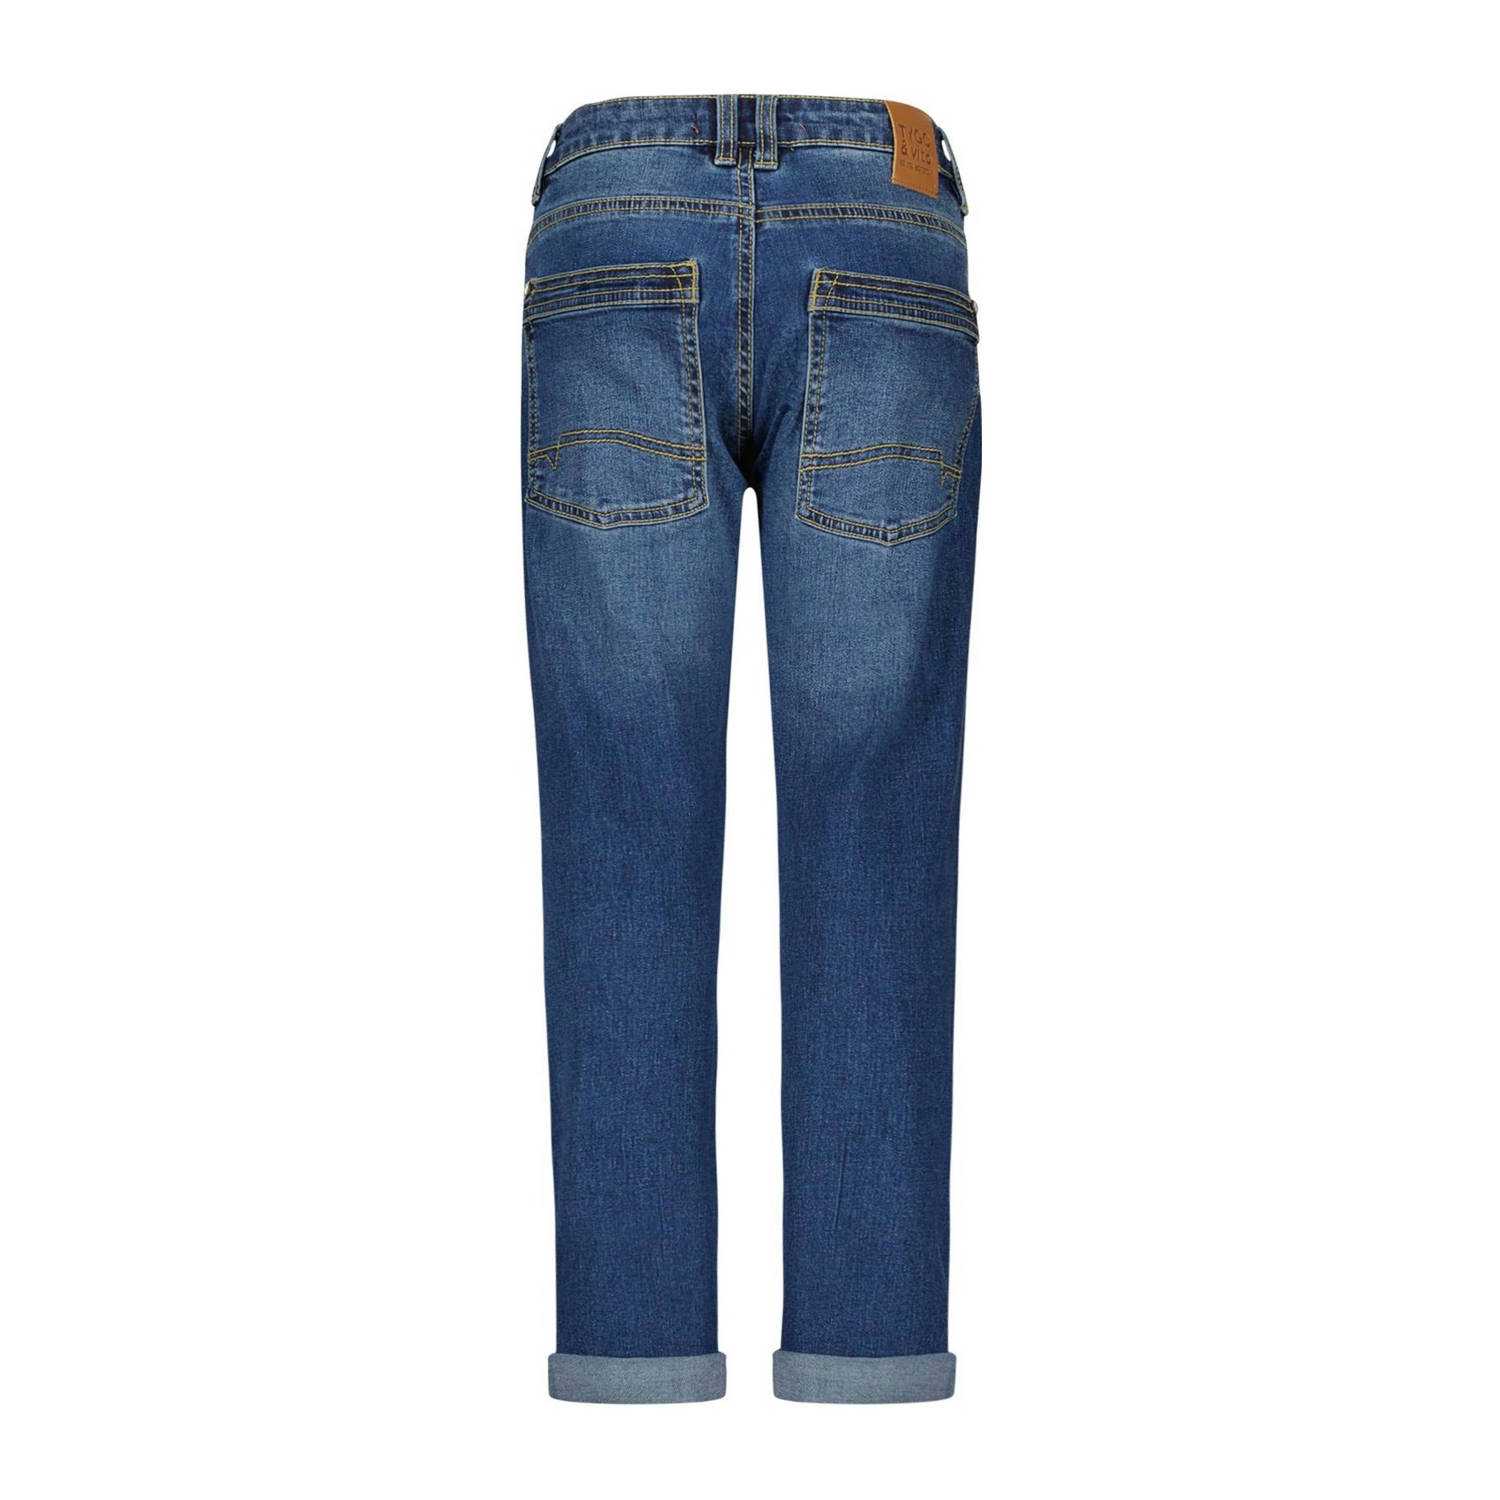 TYGO & vito straight fit jeans Boaz medium blue denim